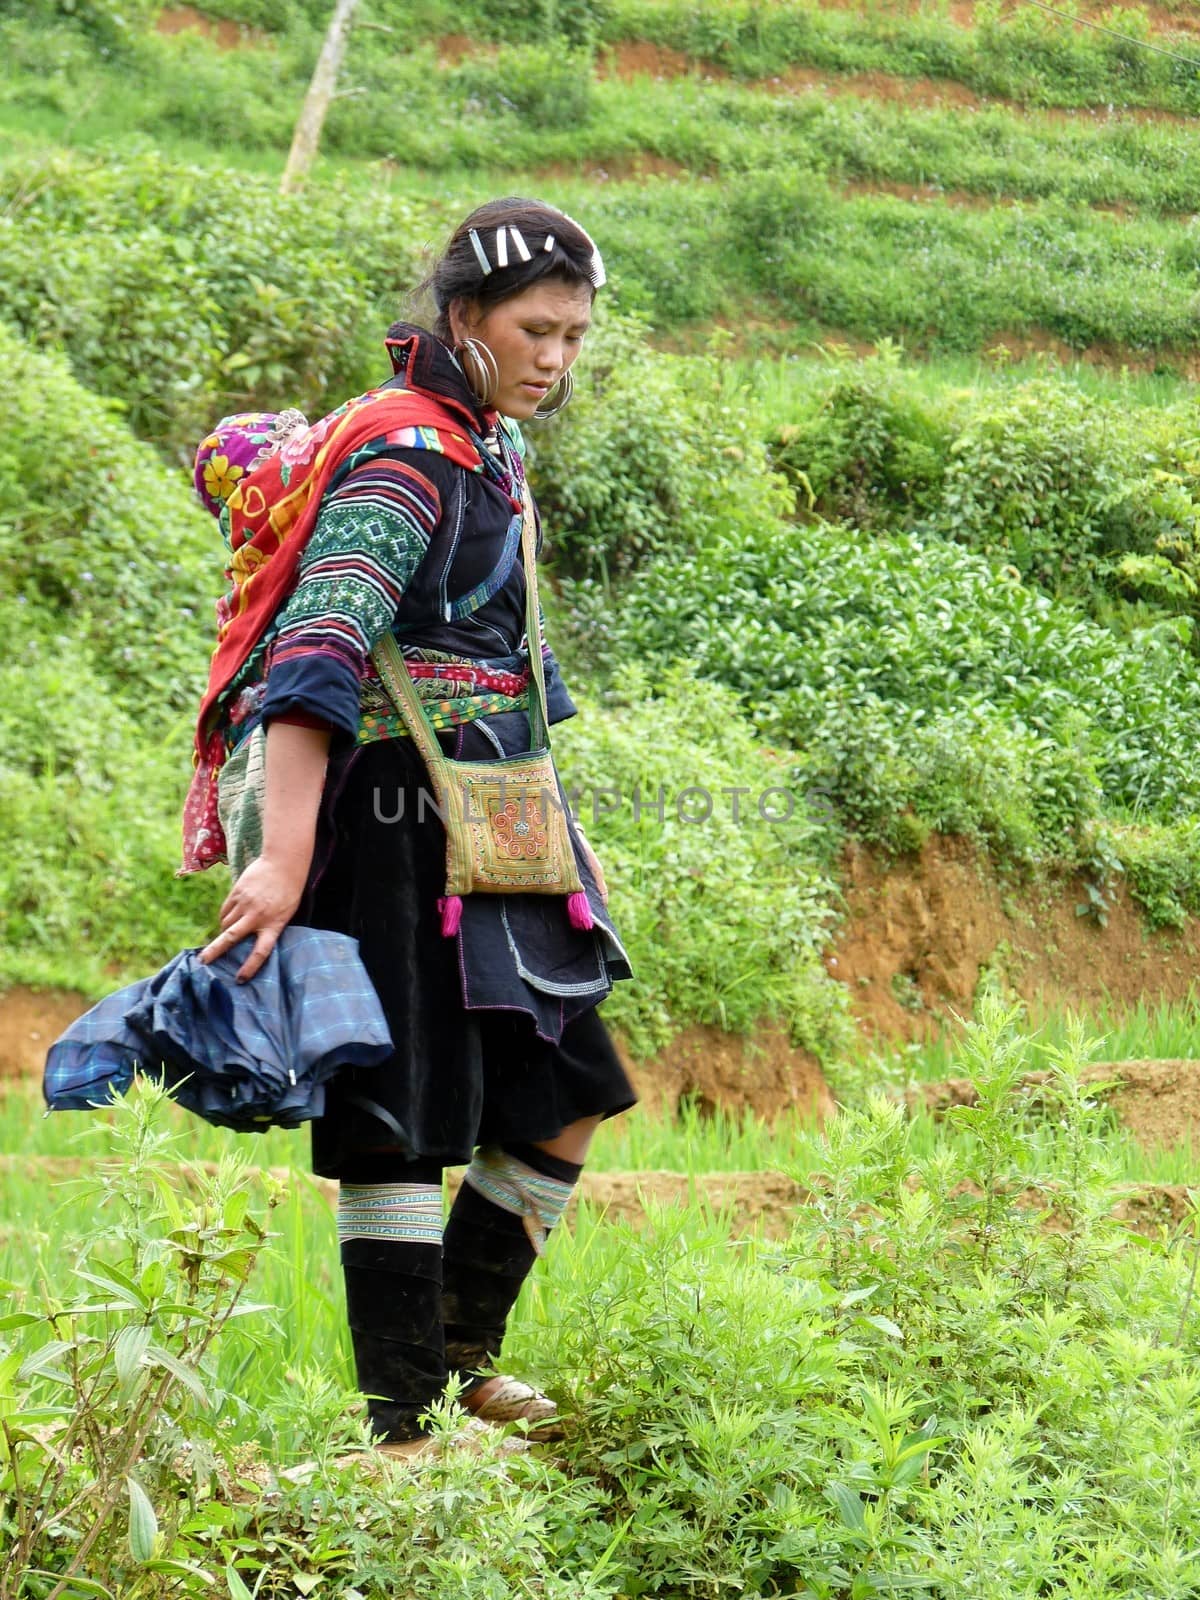 Hmong woman in Sapa, Vietnam